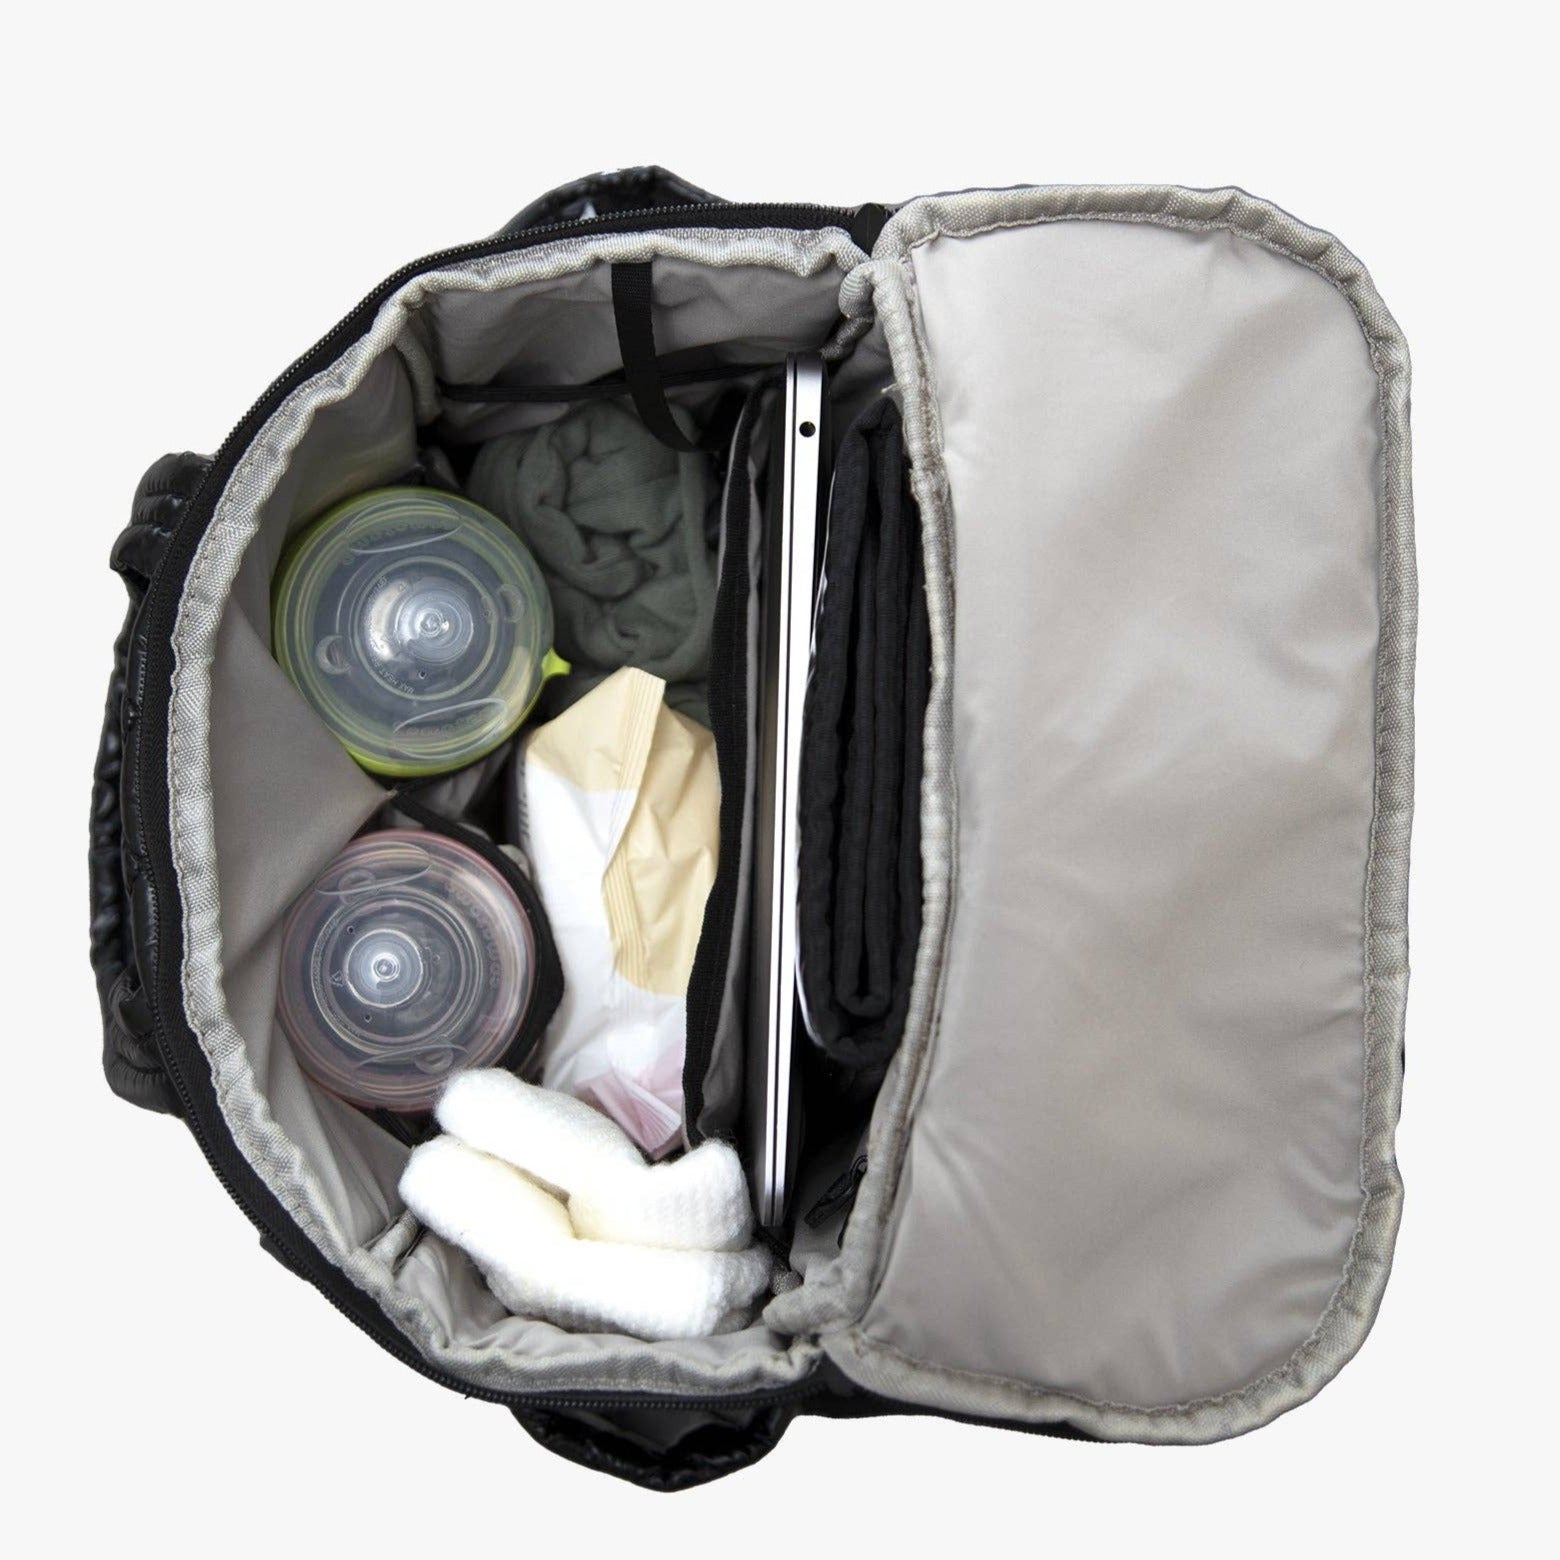 London Backpack Diaper Bag - Polar